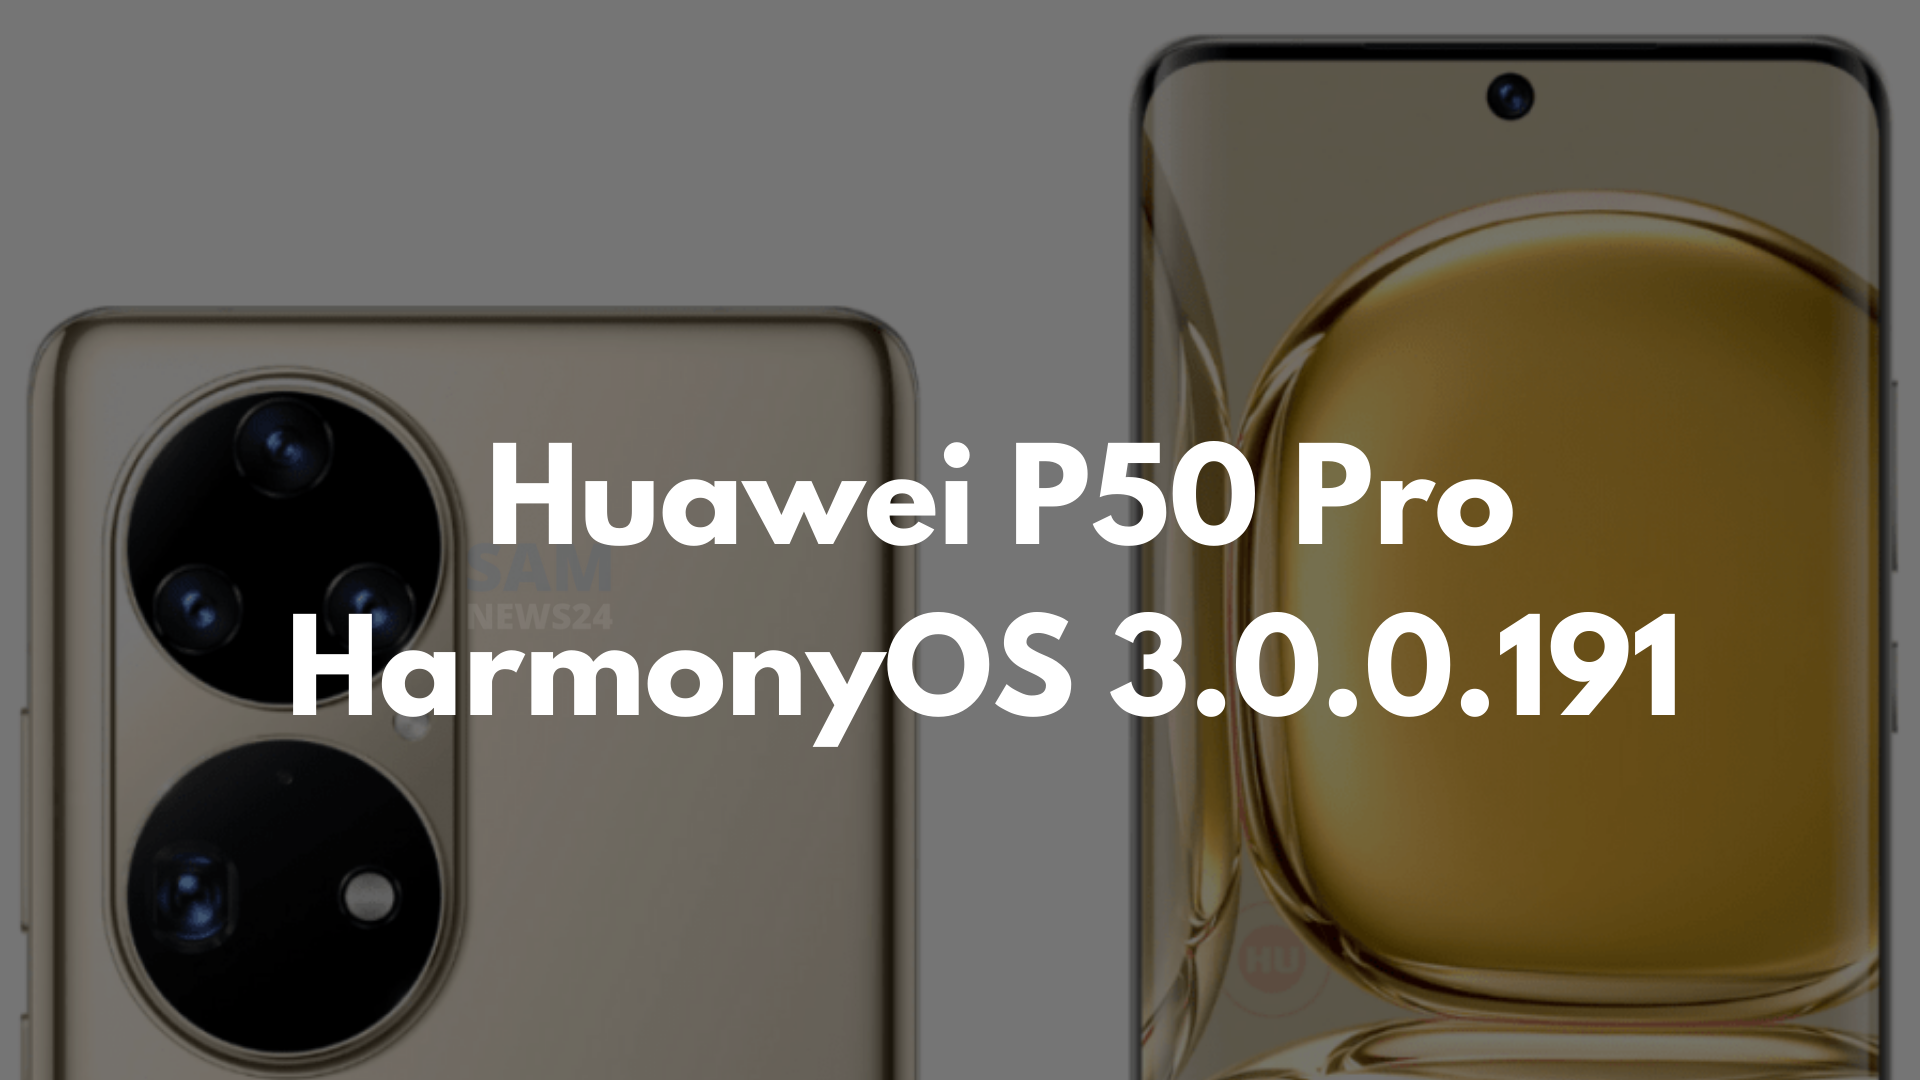 Huawei P50 Pro HarmonyOS 3.0.0.191 update